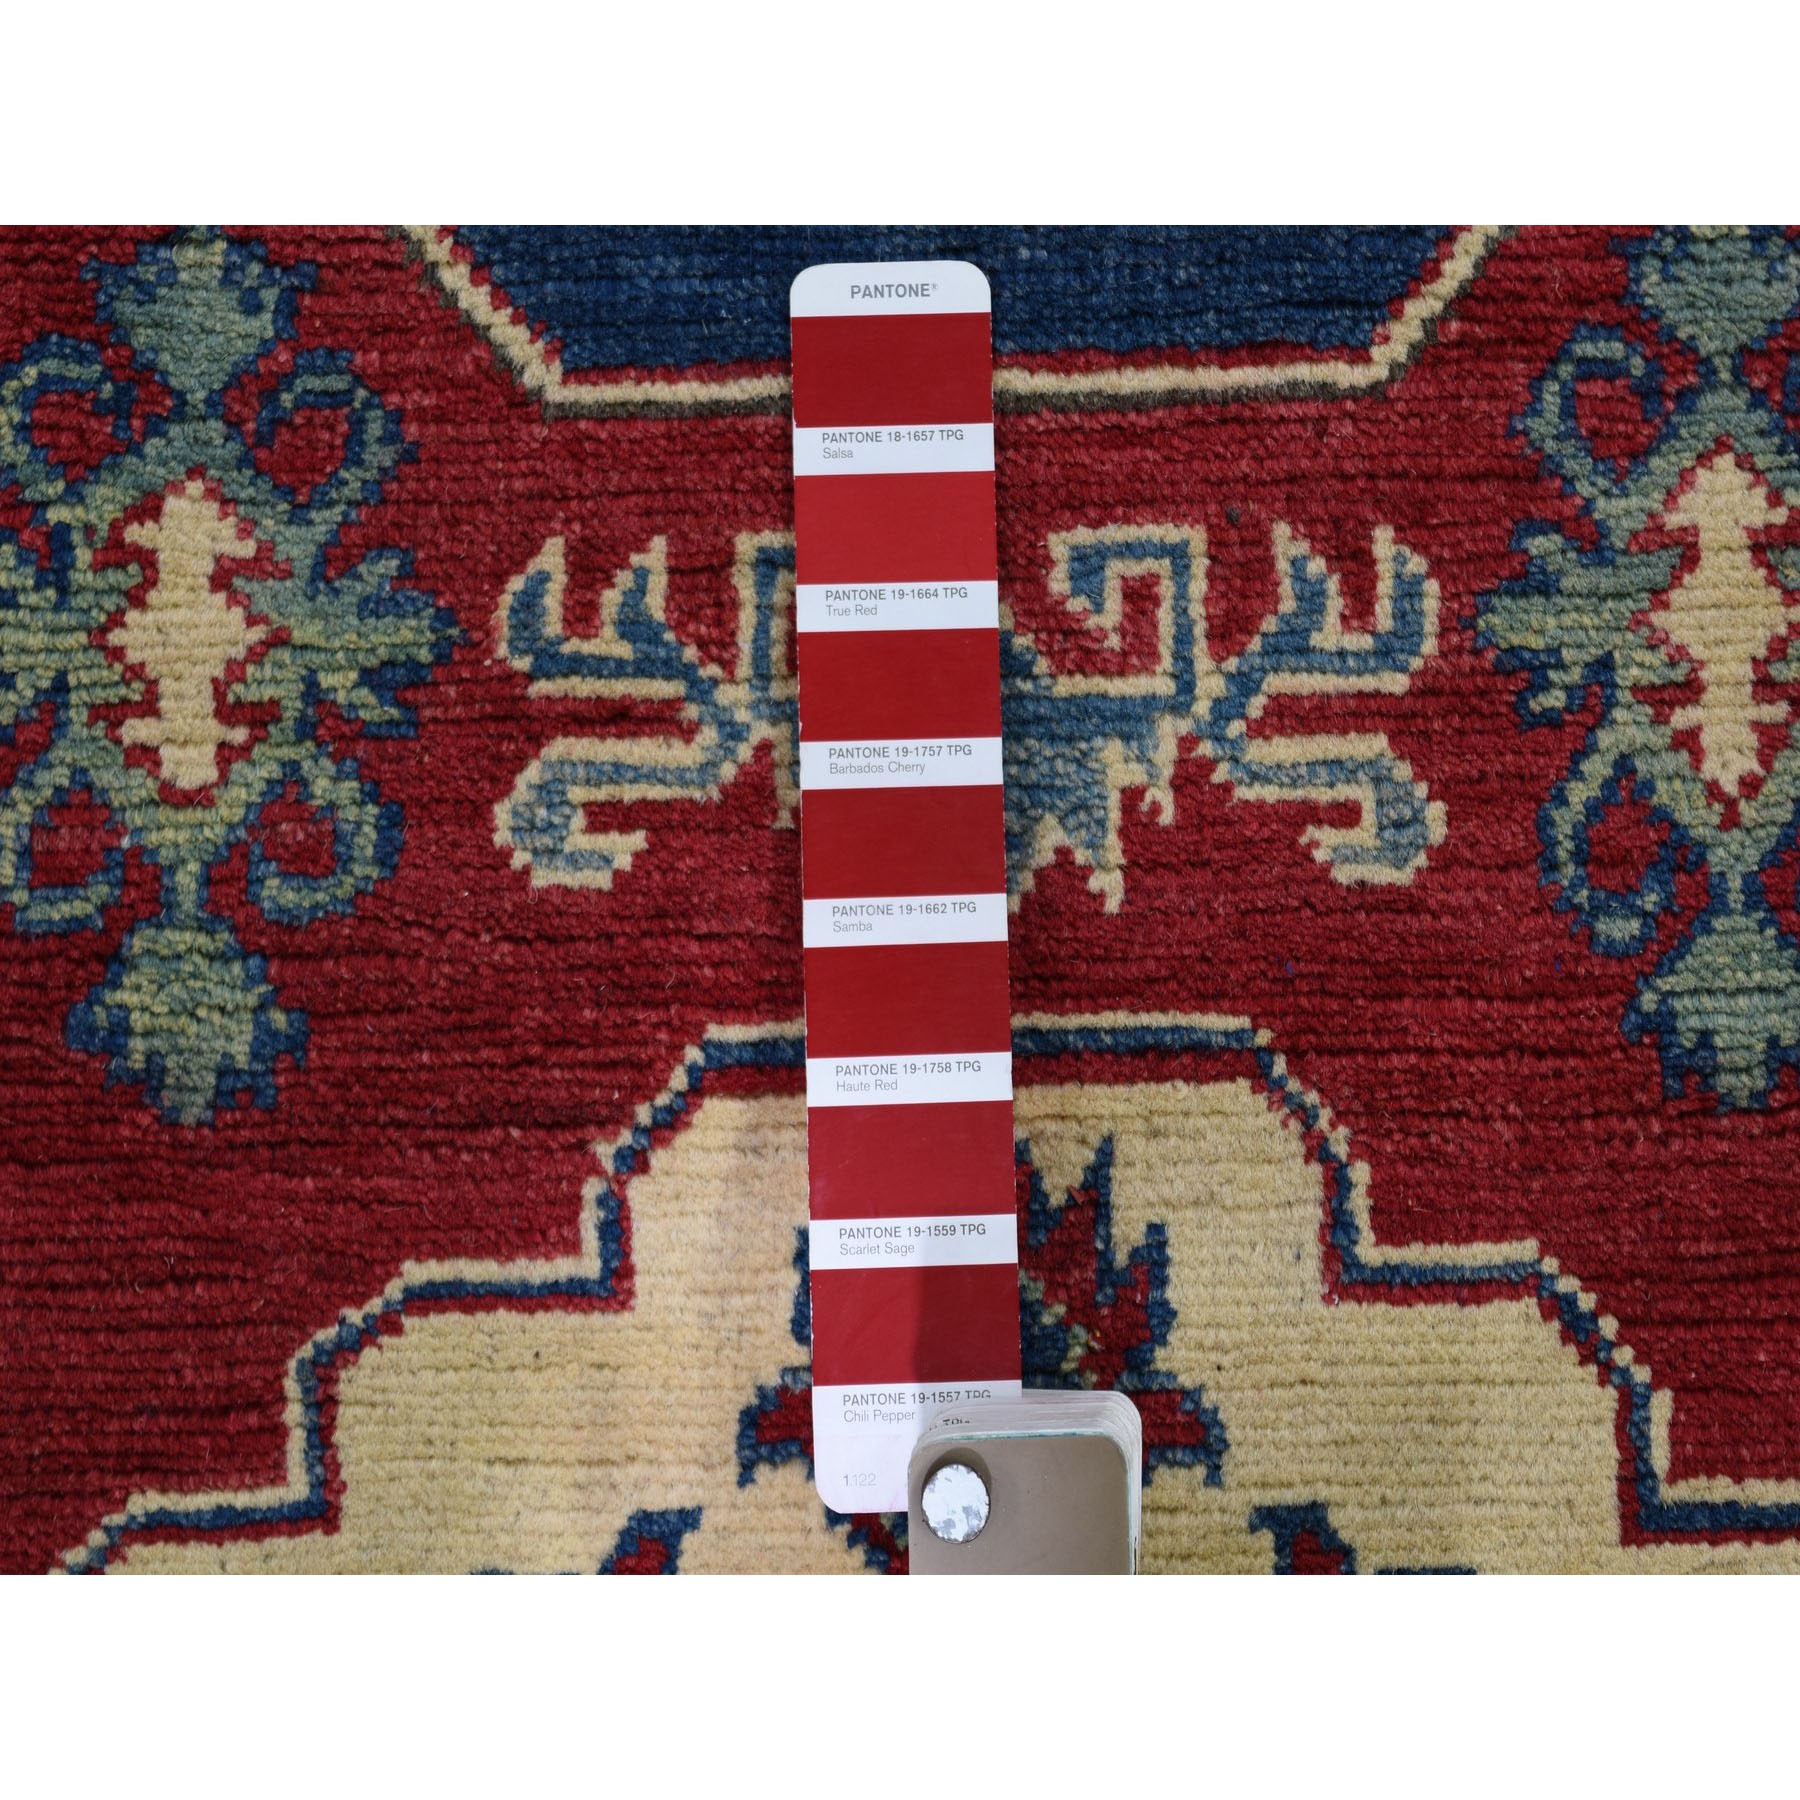 2-8 x20- Red Kazak Tribal Design XL Runner Pure Wool Hand Knotted Oriental Rug 